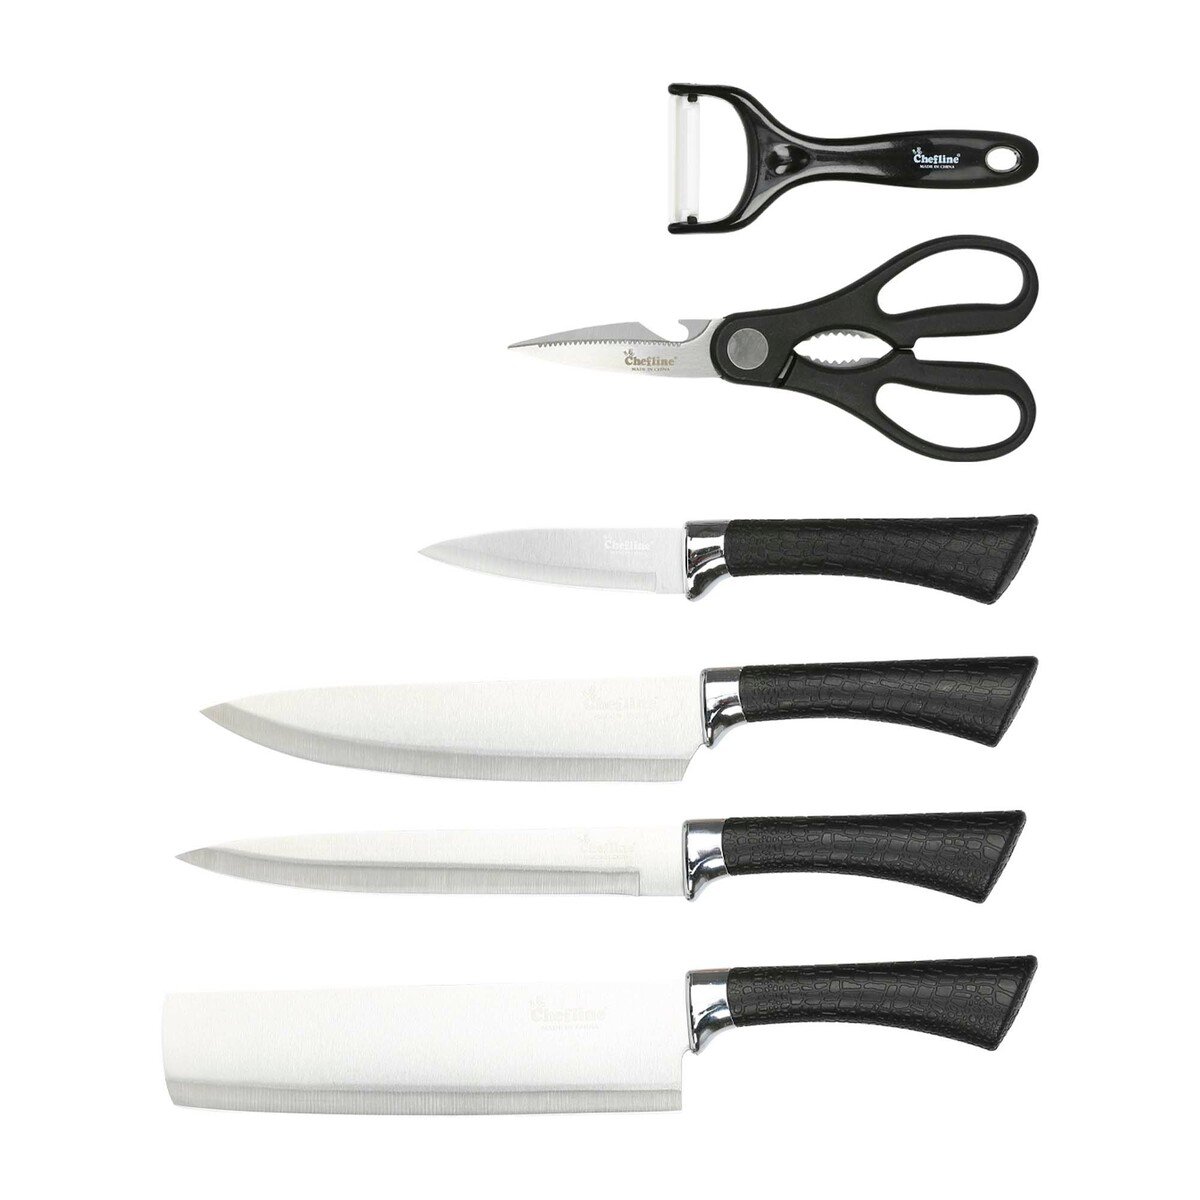 Chefline Knives GS-06105 6S 6pcs